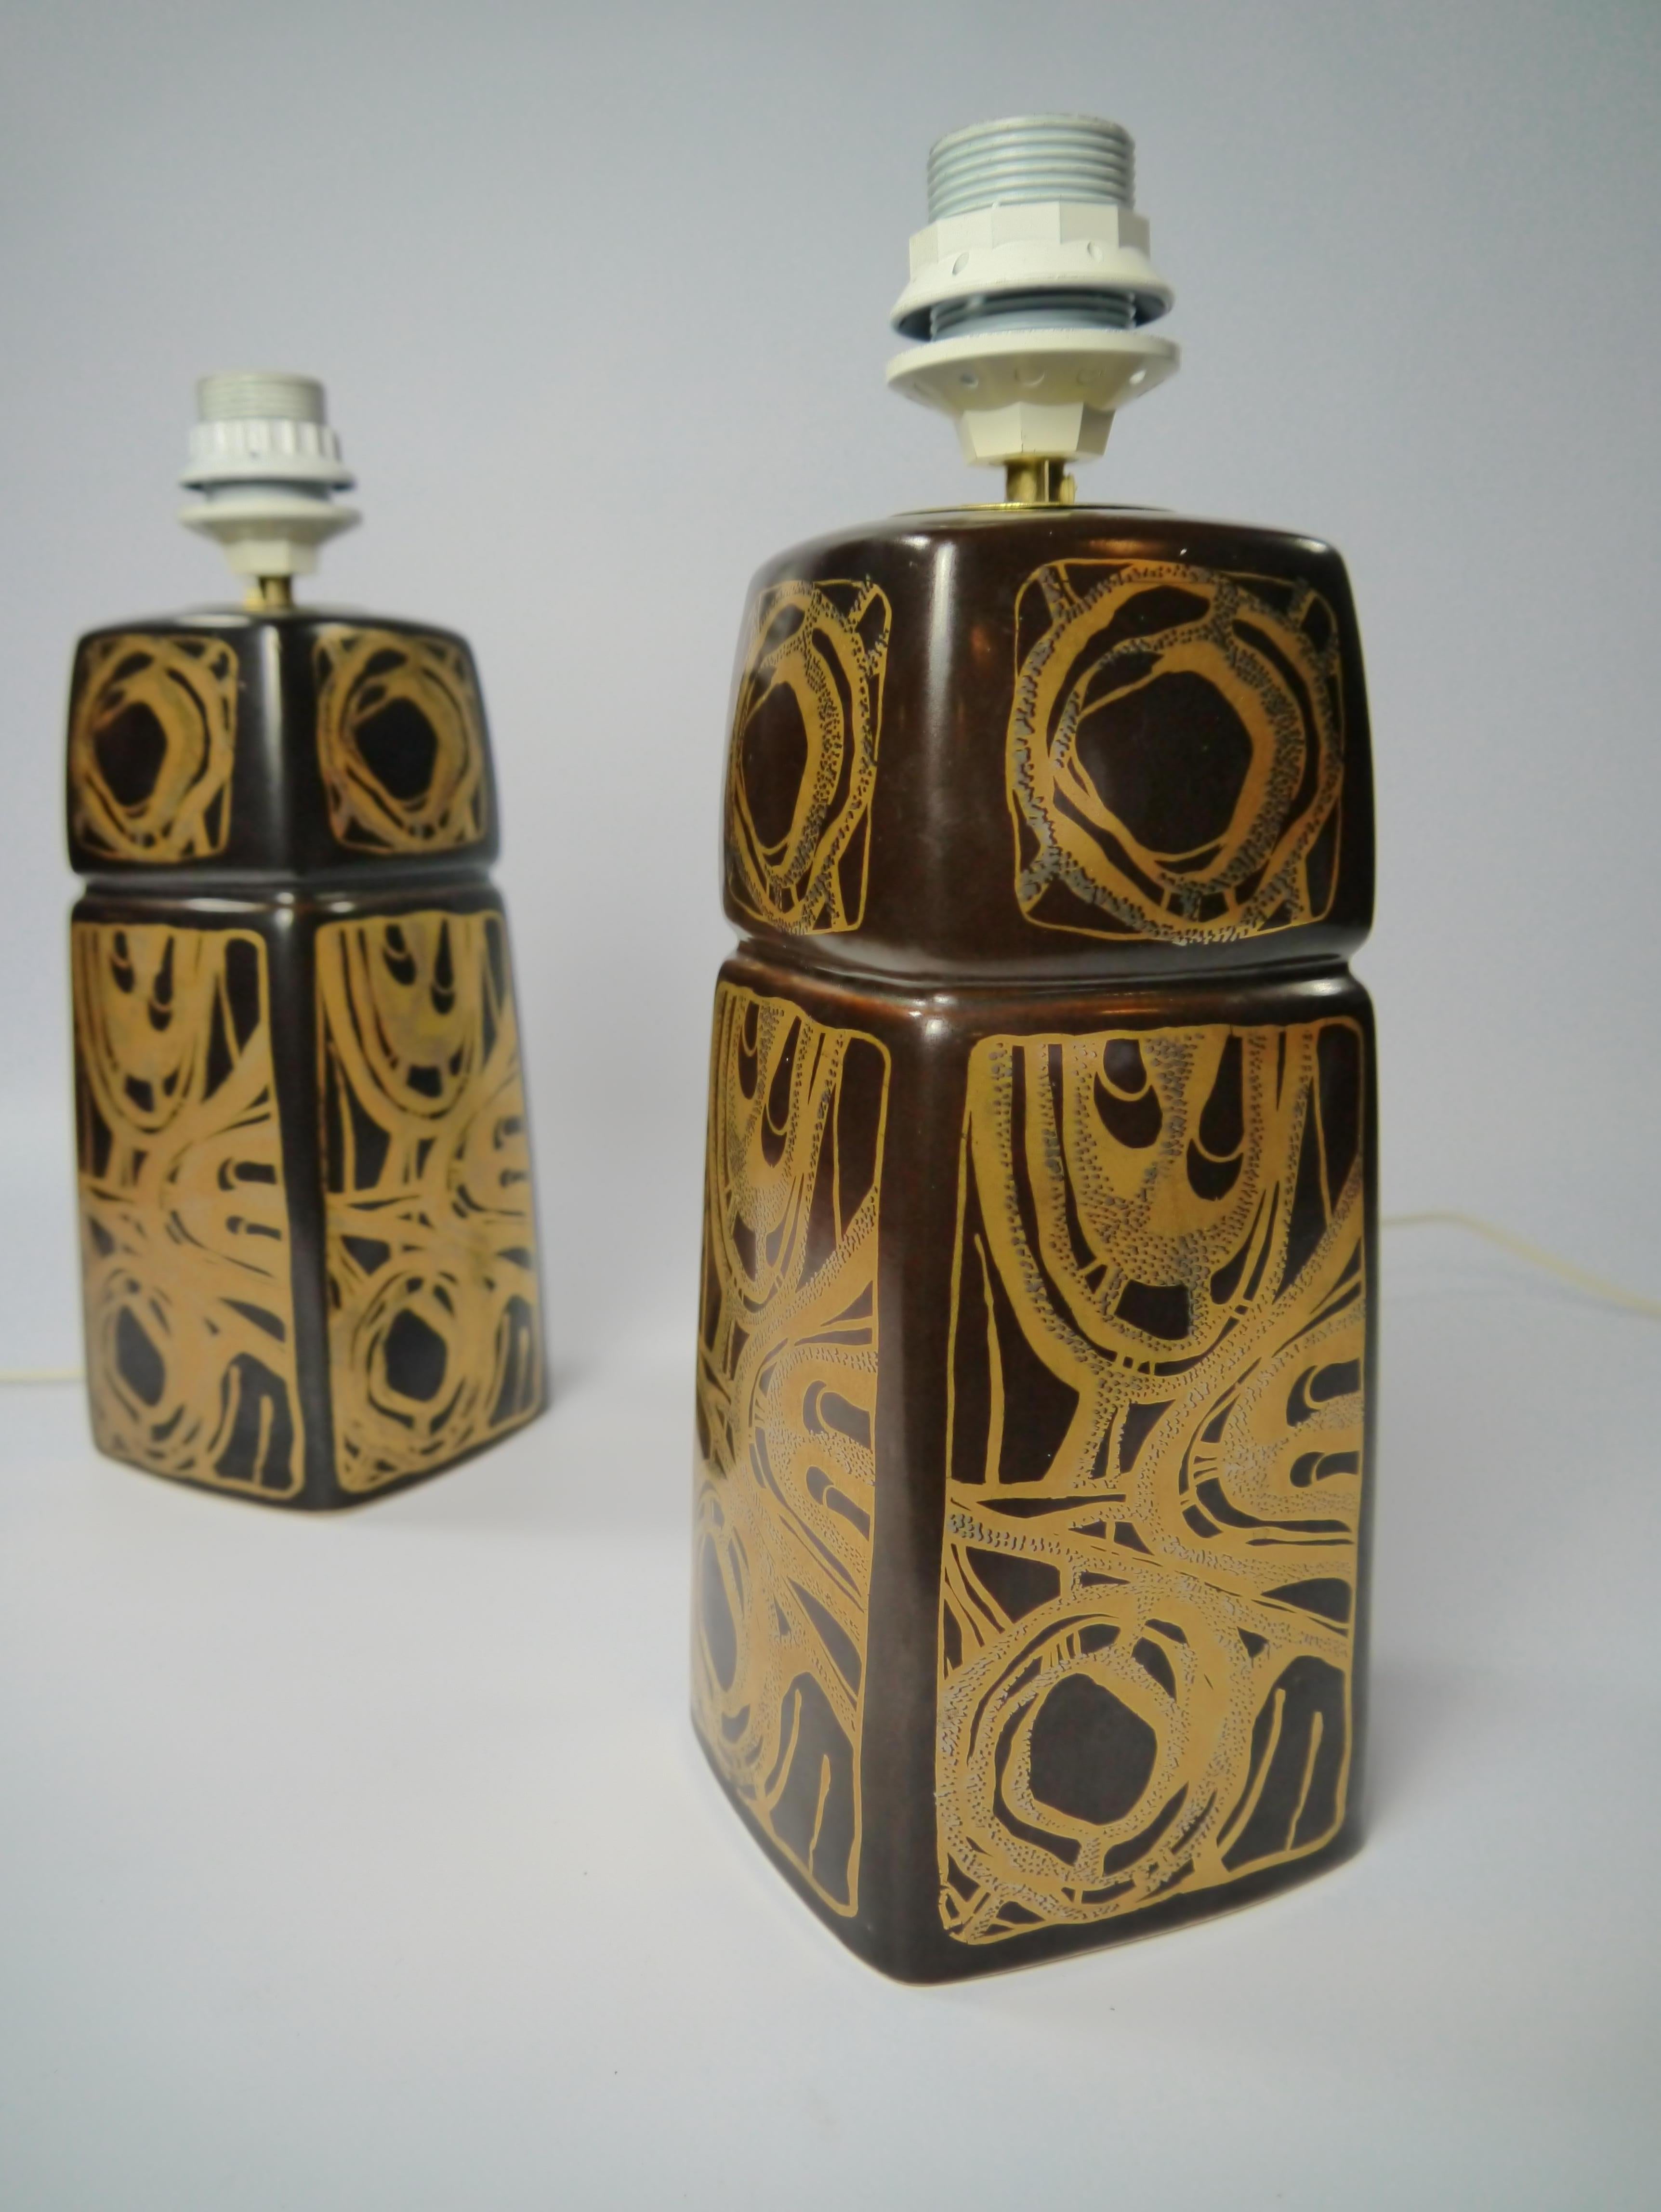 Pair of glazed ceramic lamps by Søholm Stentøj, Denmark, 1960s. Deep dark mocha brown color and striking golden organic pattern.